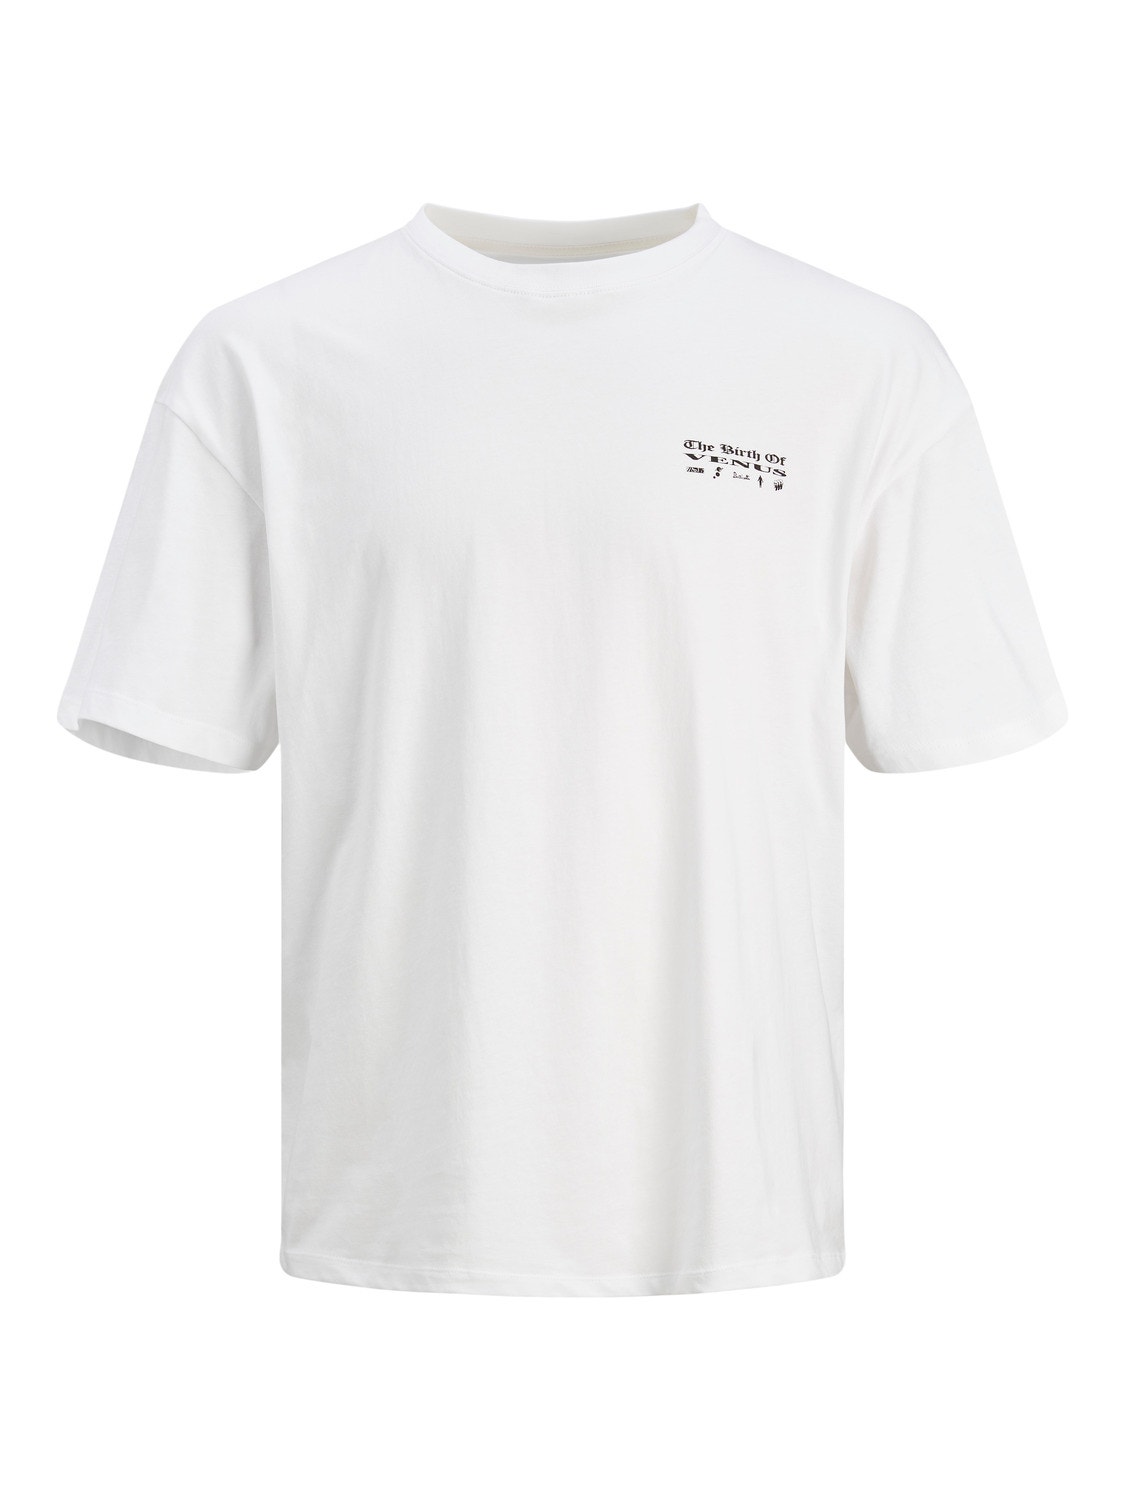 Jack & Jones Printed Crew neck T-shirt -Bright White - 12243535